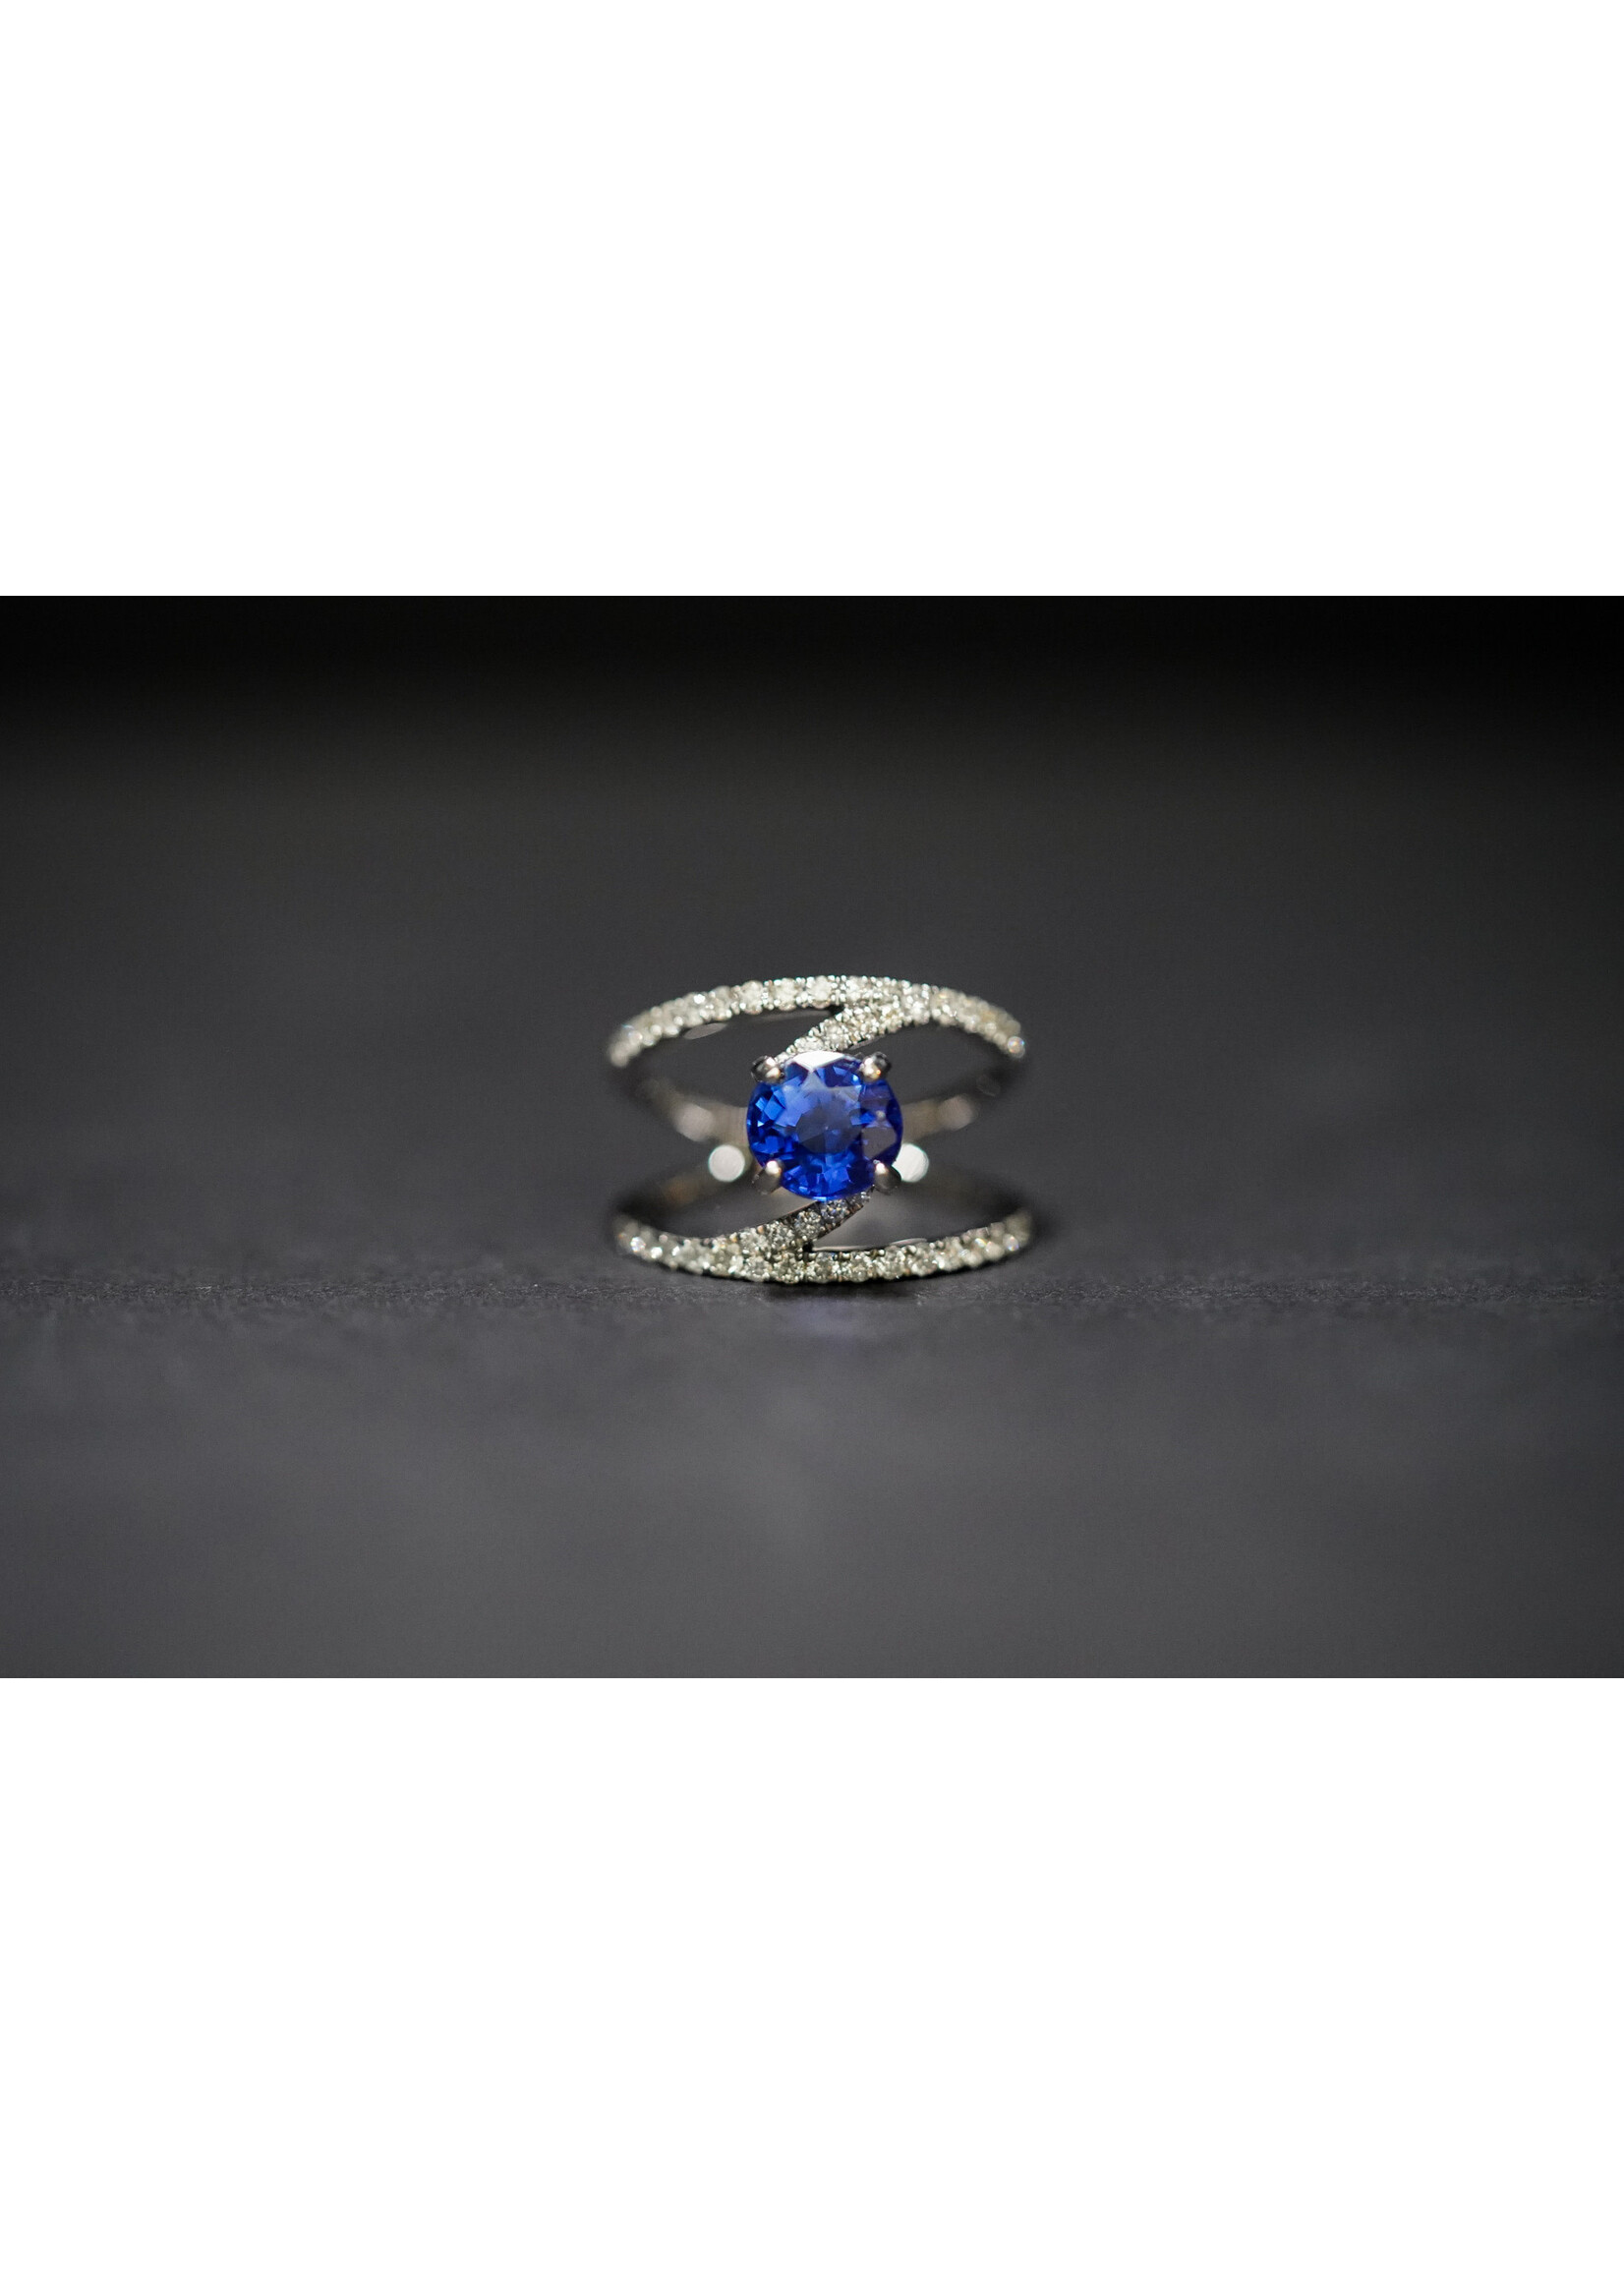 14KW 5.26g 3.35ctw (2.68ctr) Sapphire & Diamond Fashion Ring (size 7)